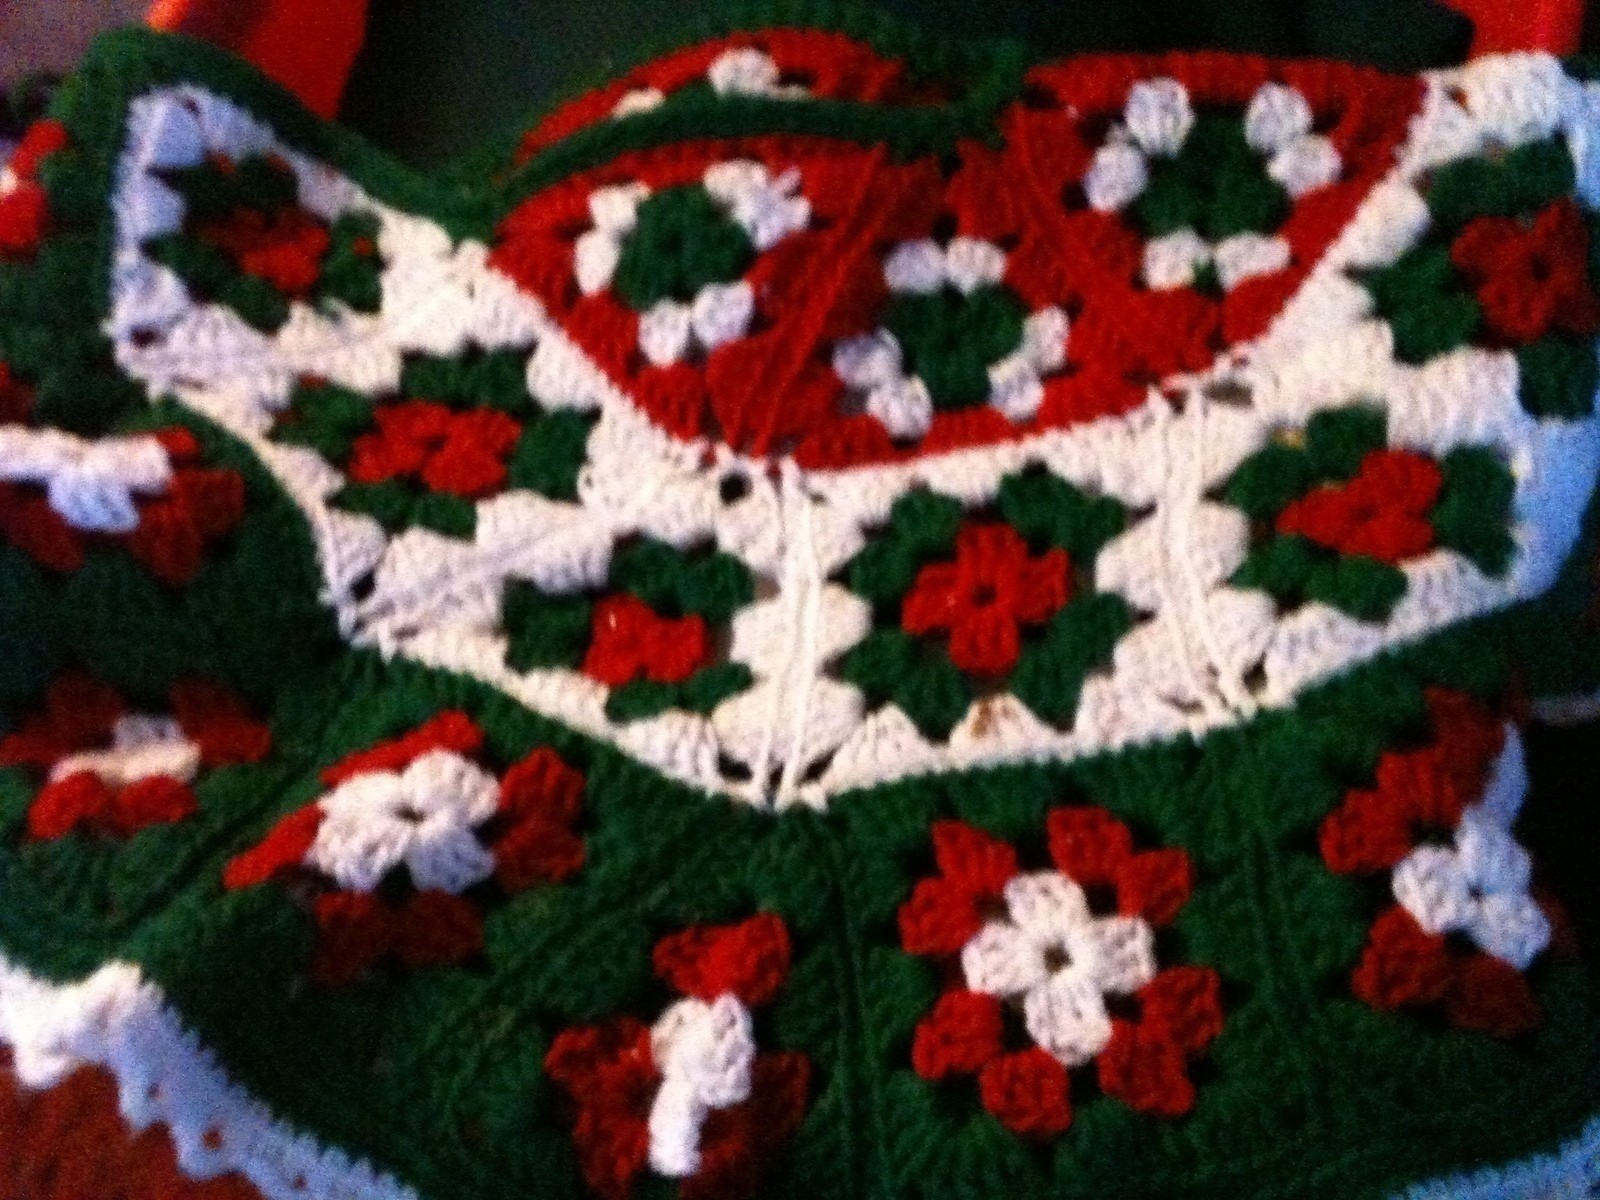 Crochet Tree Skirt Pattern Christmas Tree Skirt How To Make A Christmas Tree Skirt Crochet